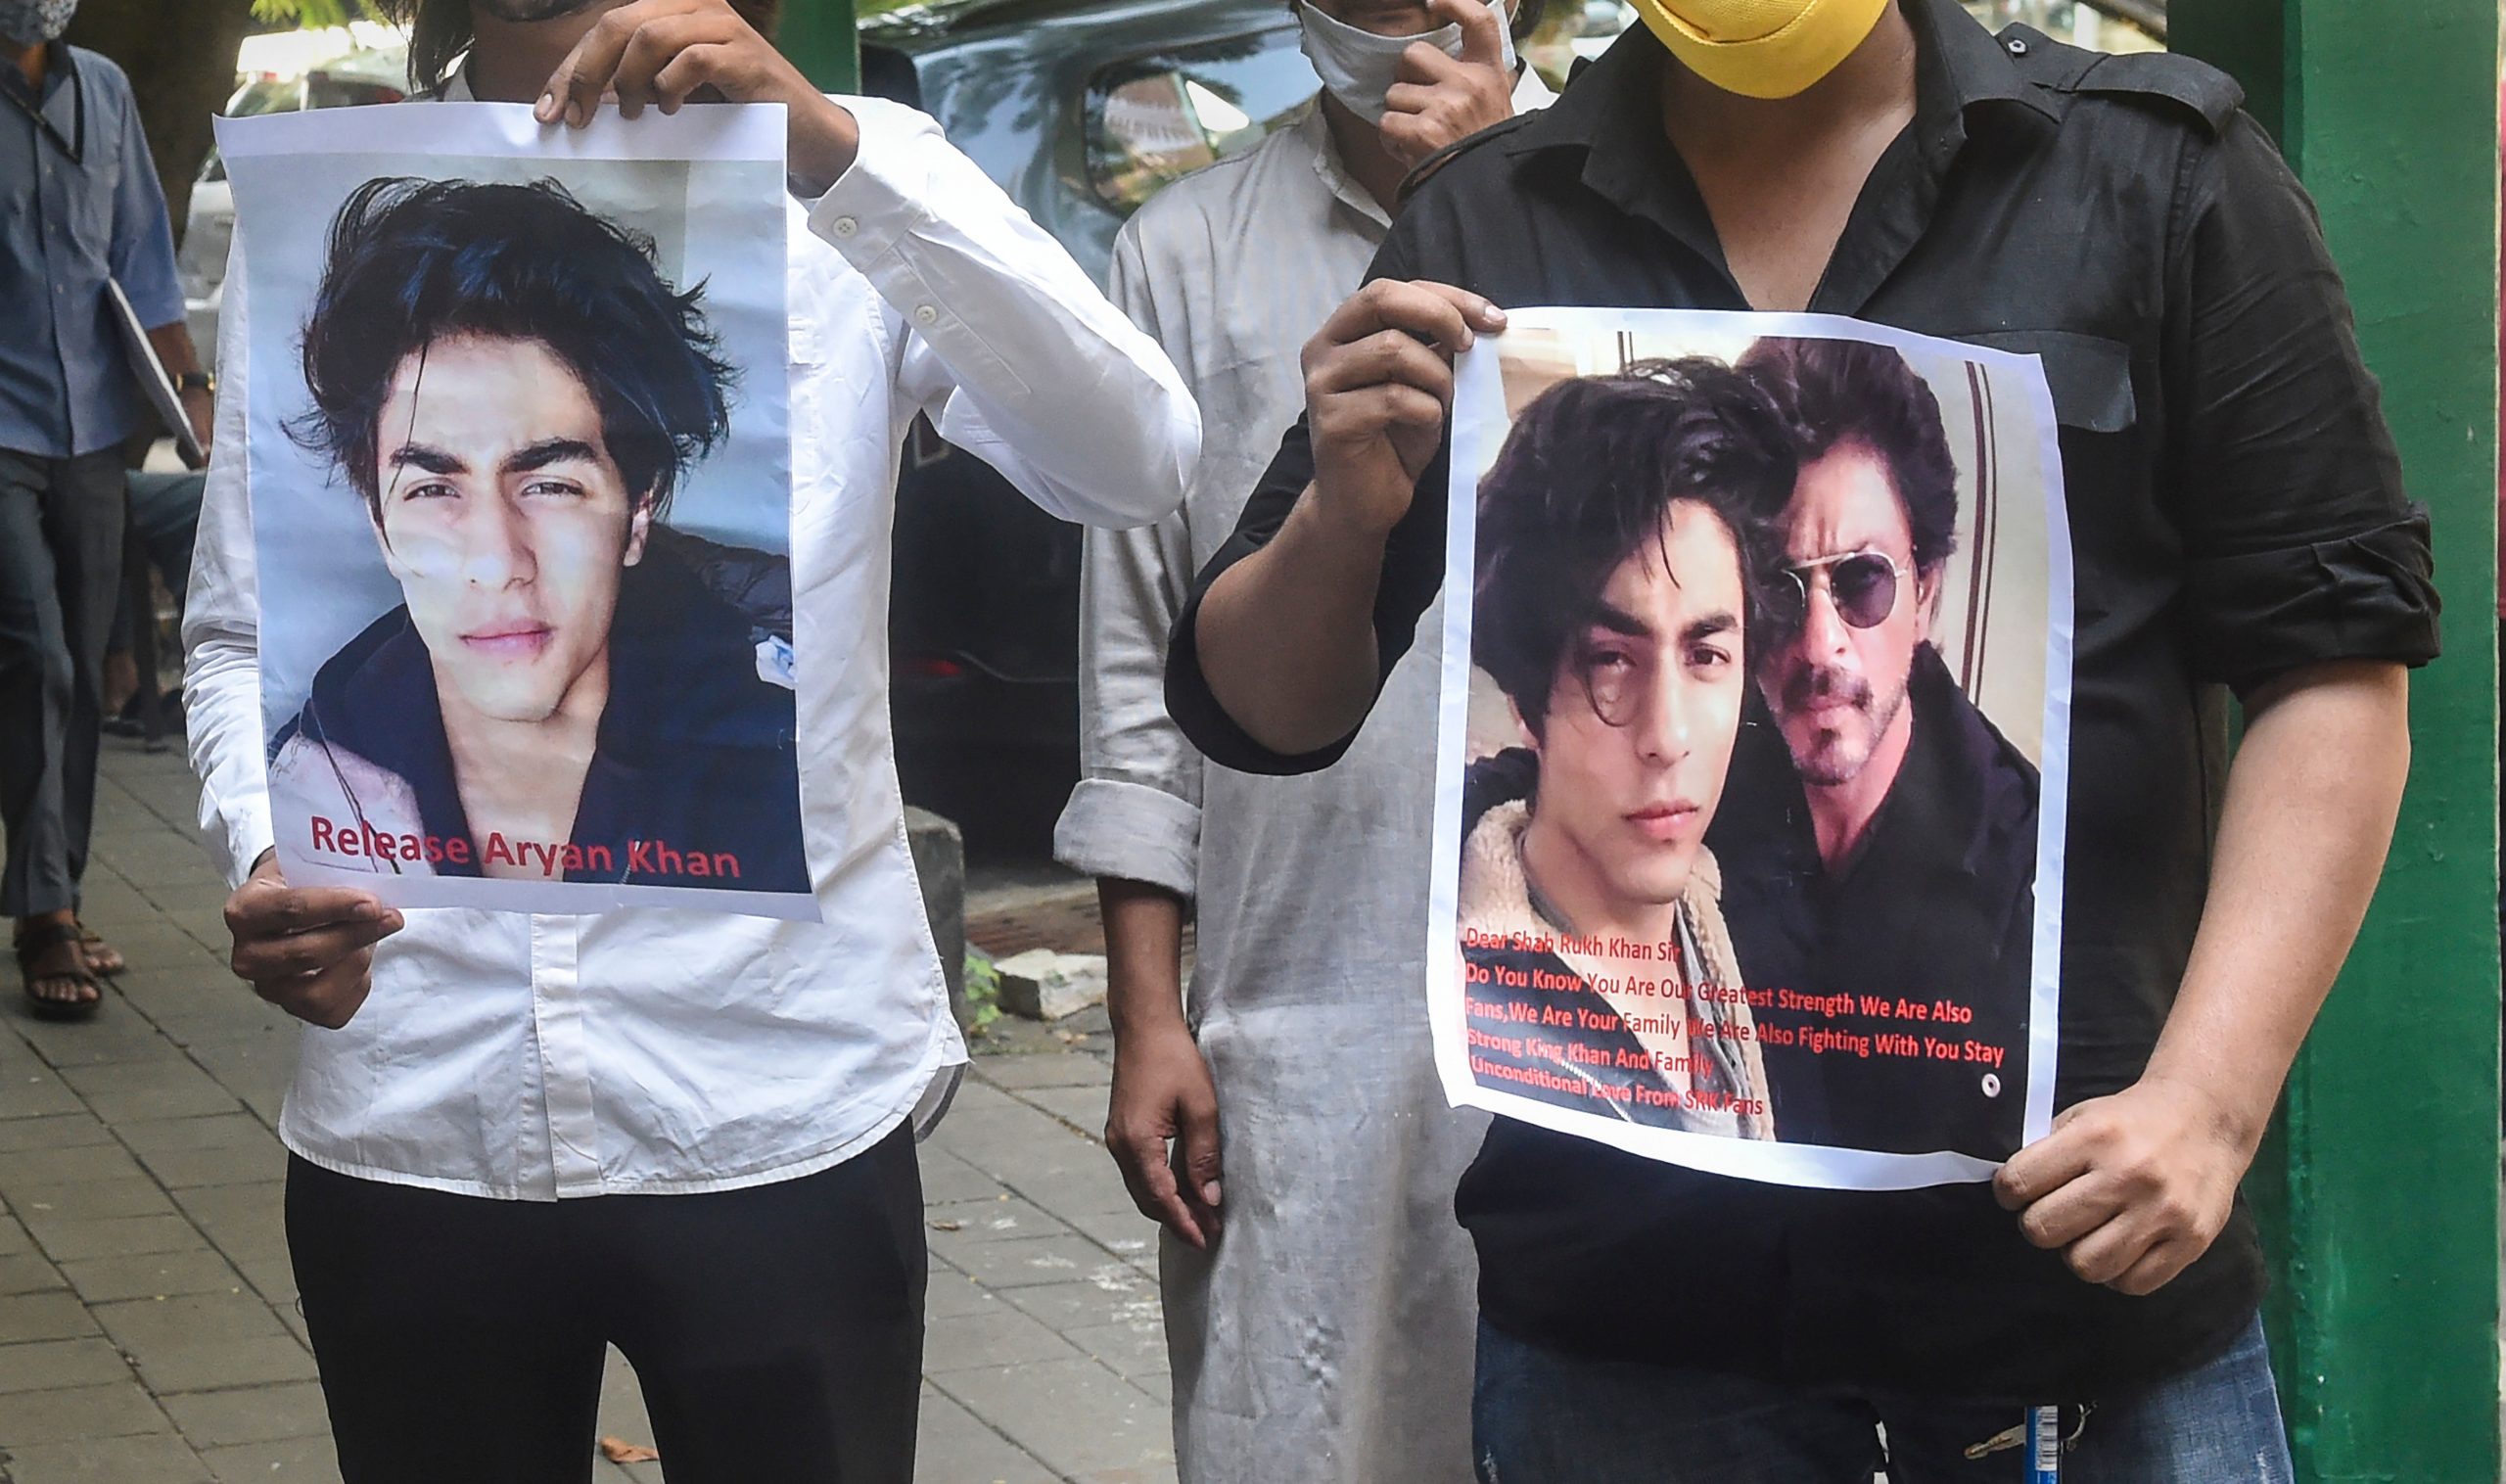 Shah Rukh Khan fans celebrate outside Mannat as Aryan Khan gets bail